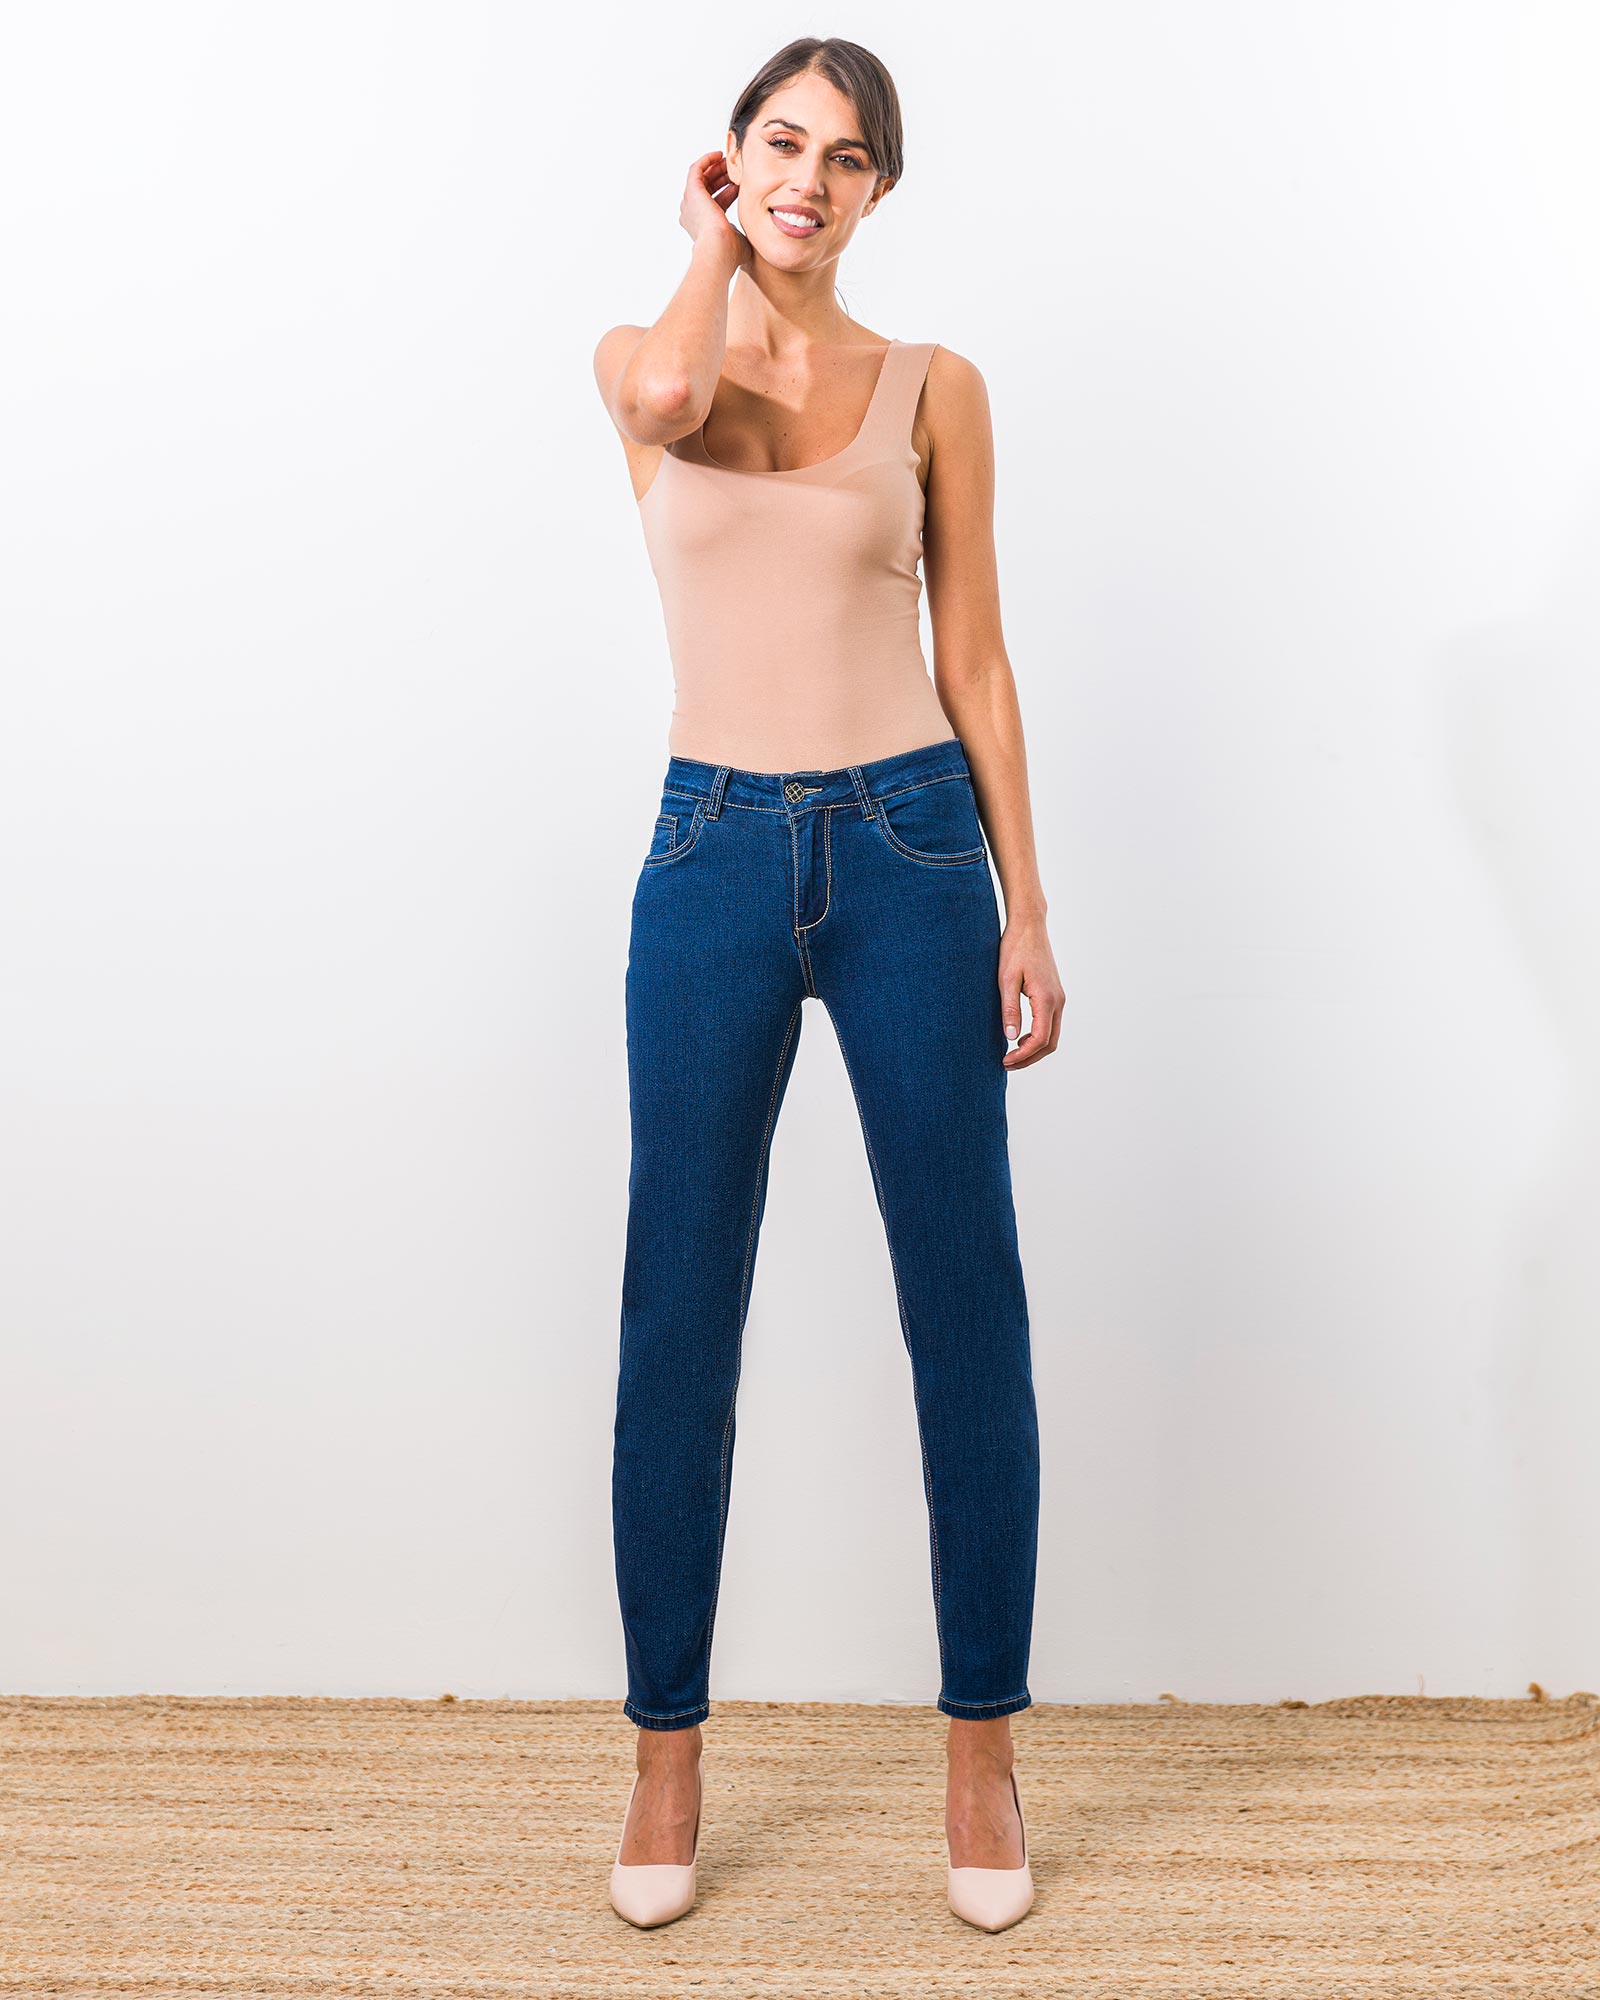 Nine West 5-Pocket Design Capri Jeans for Women